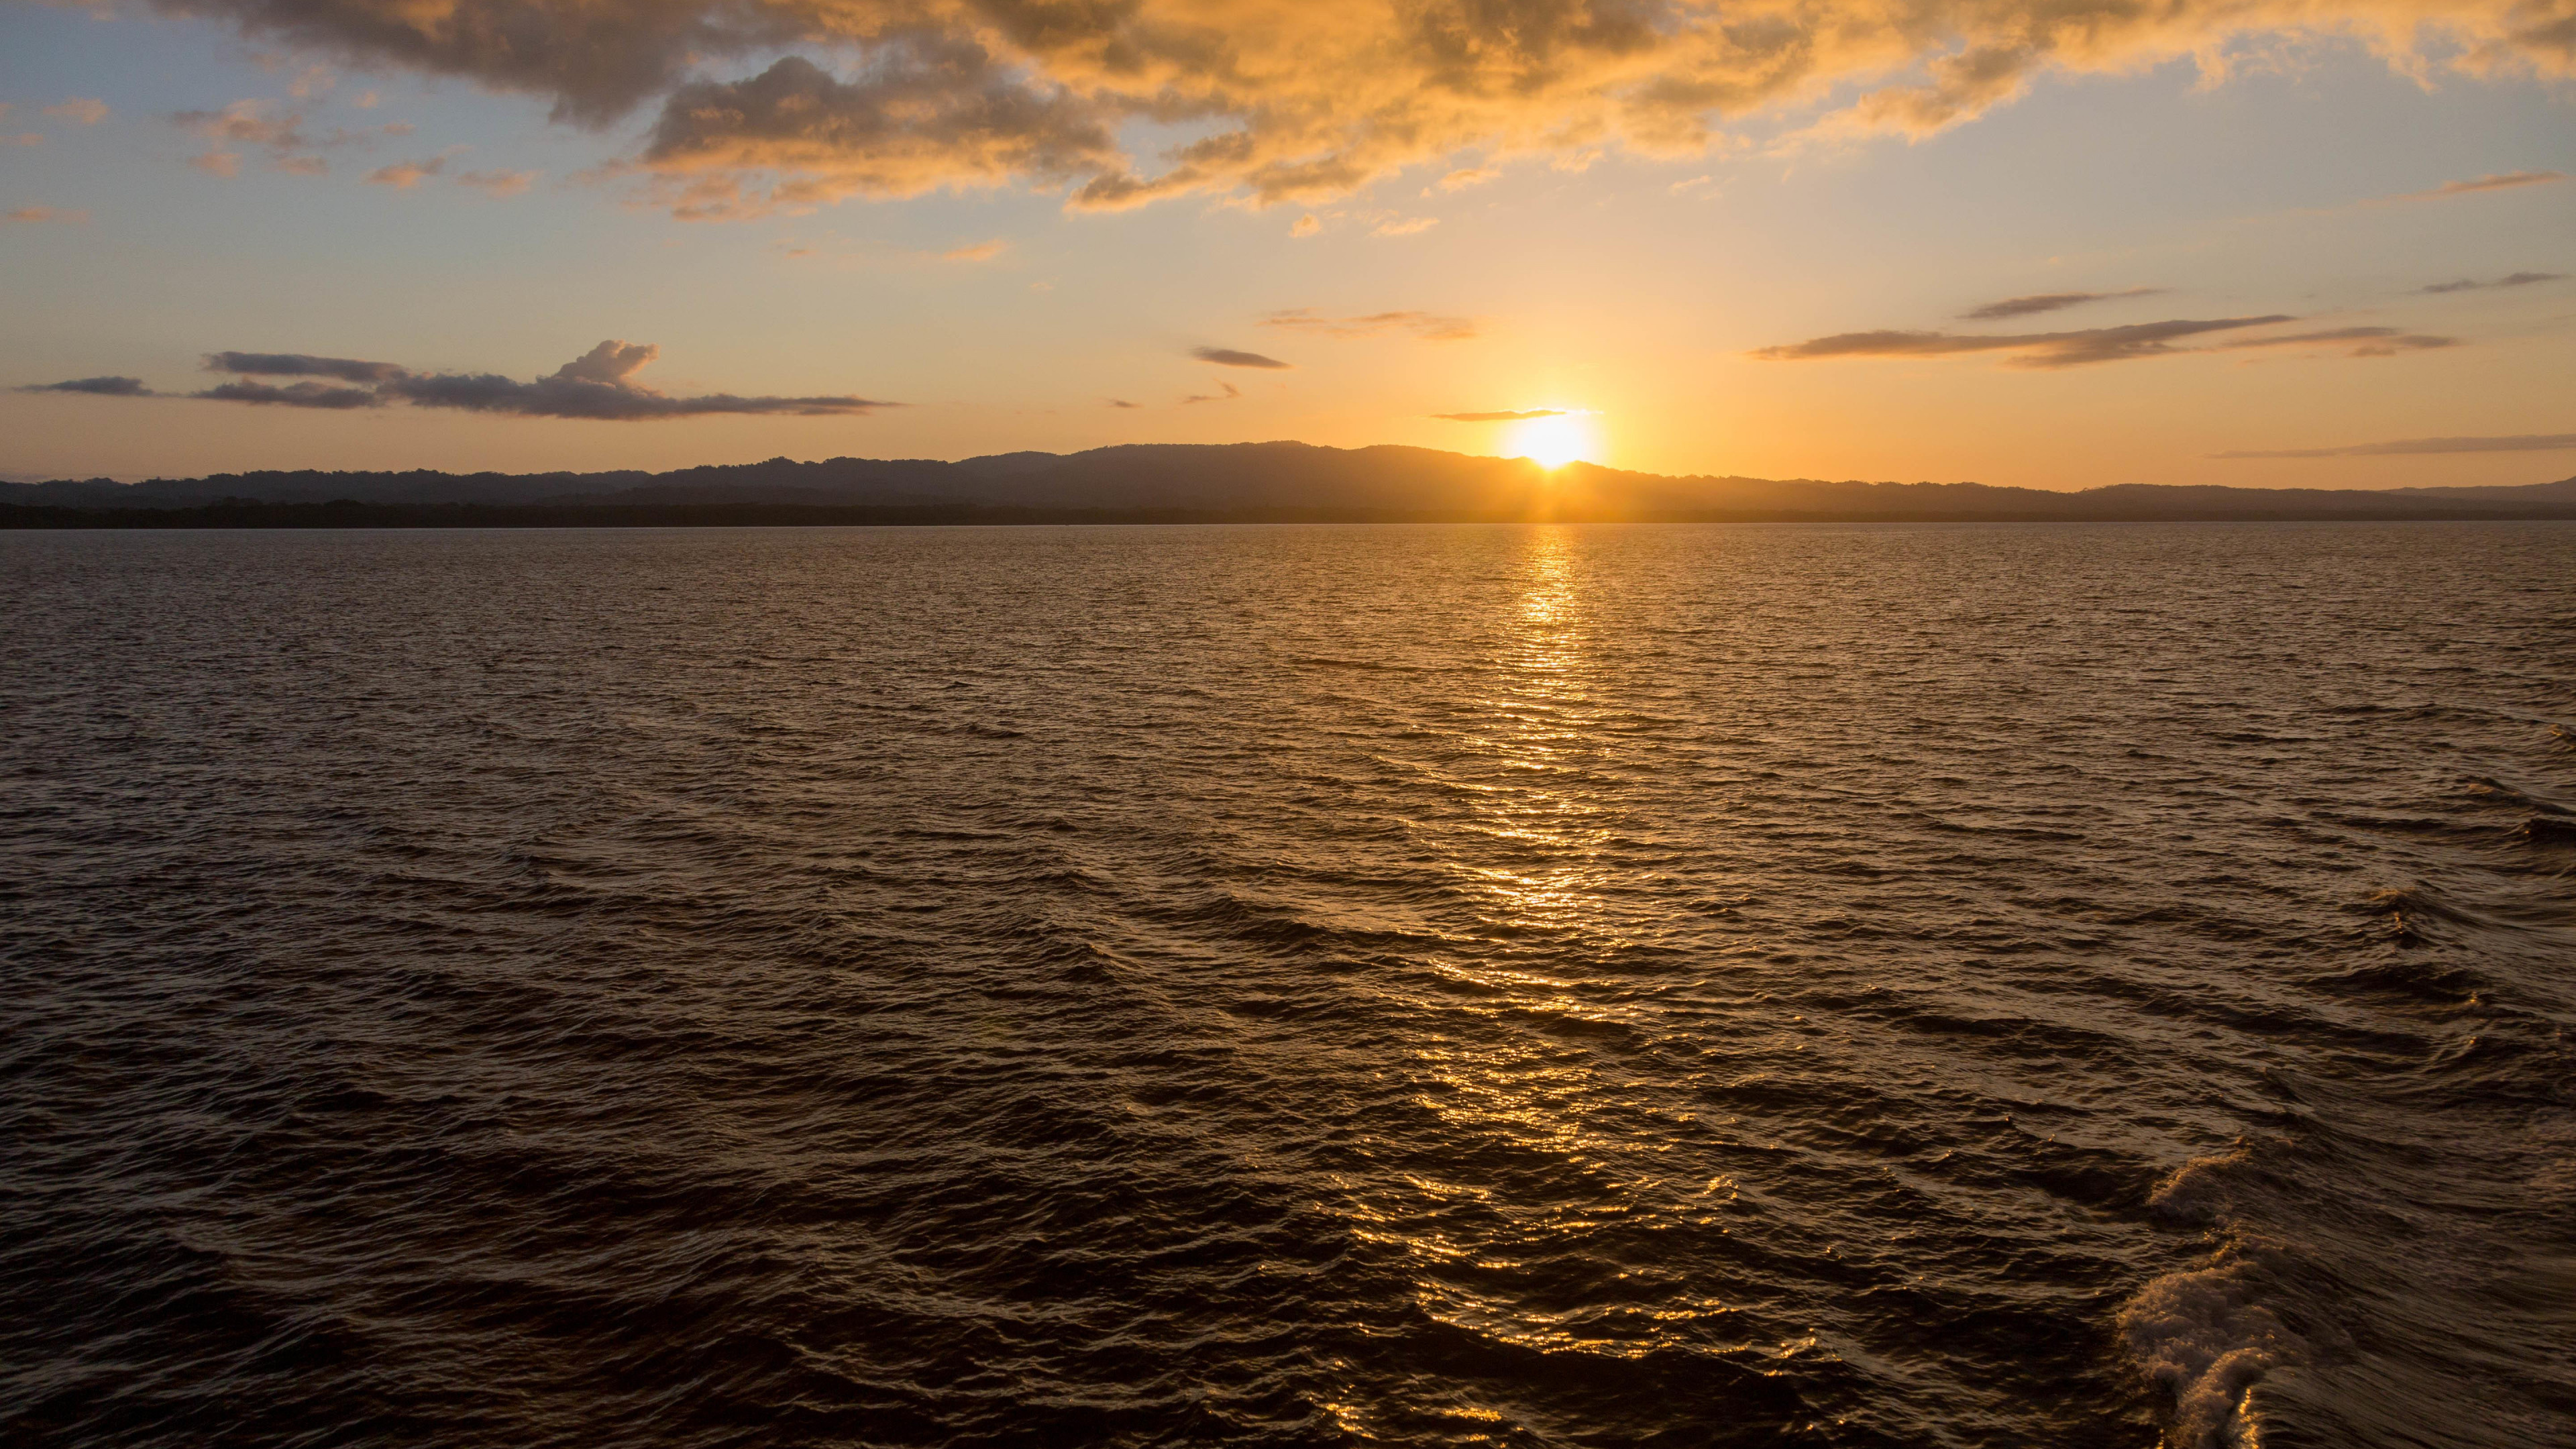 Manitoba Lake, Glowing sunset, Sky's brilliance, HD wallpaper quality, 3840x2160 4K Desktop